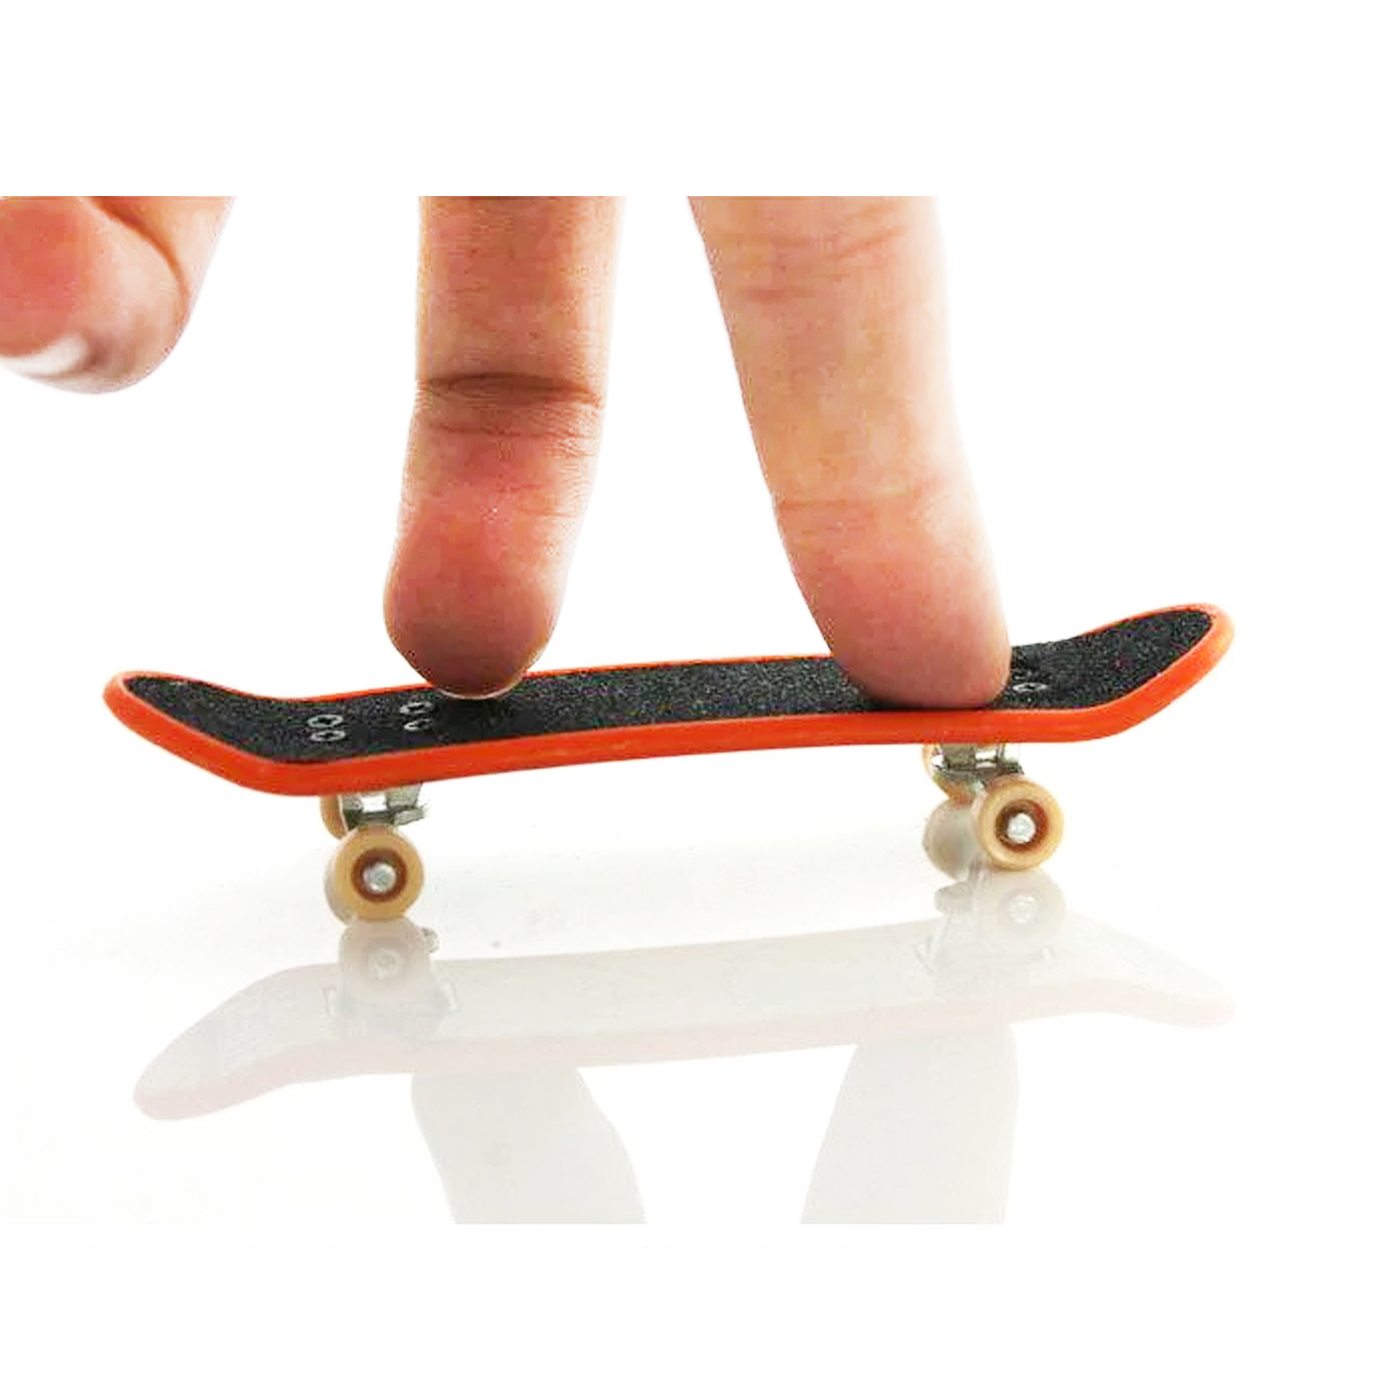 игрушка мини скейт для пальцев фото 23